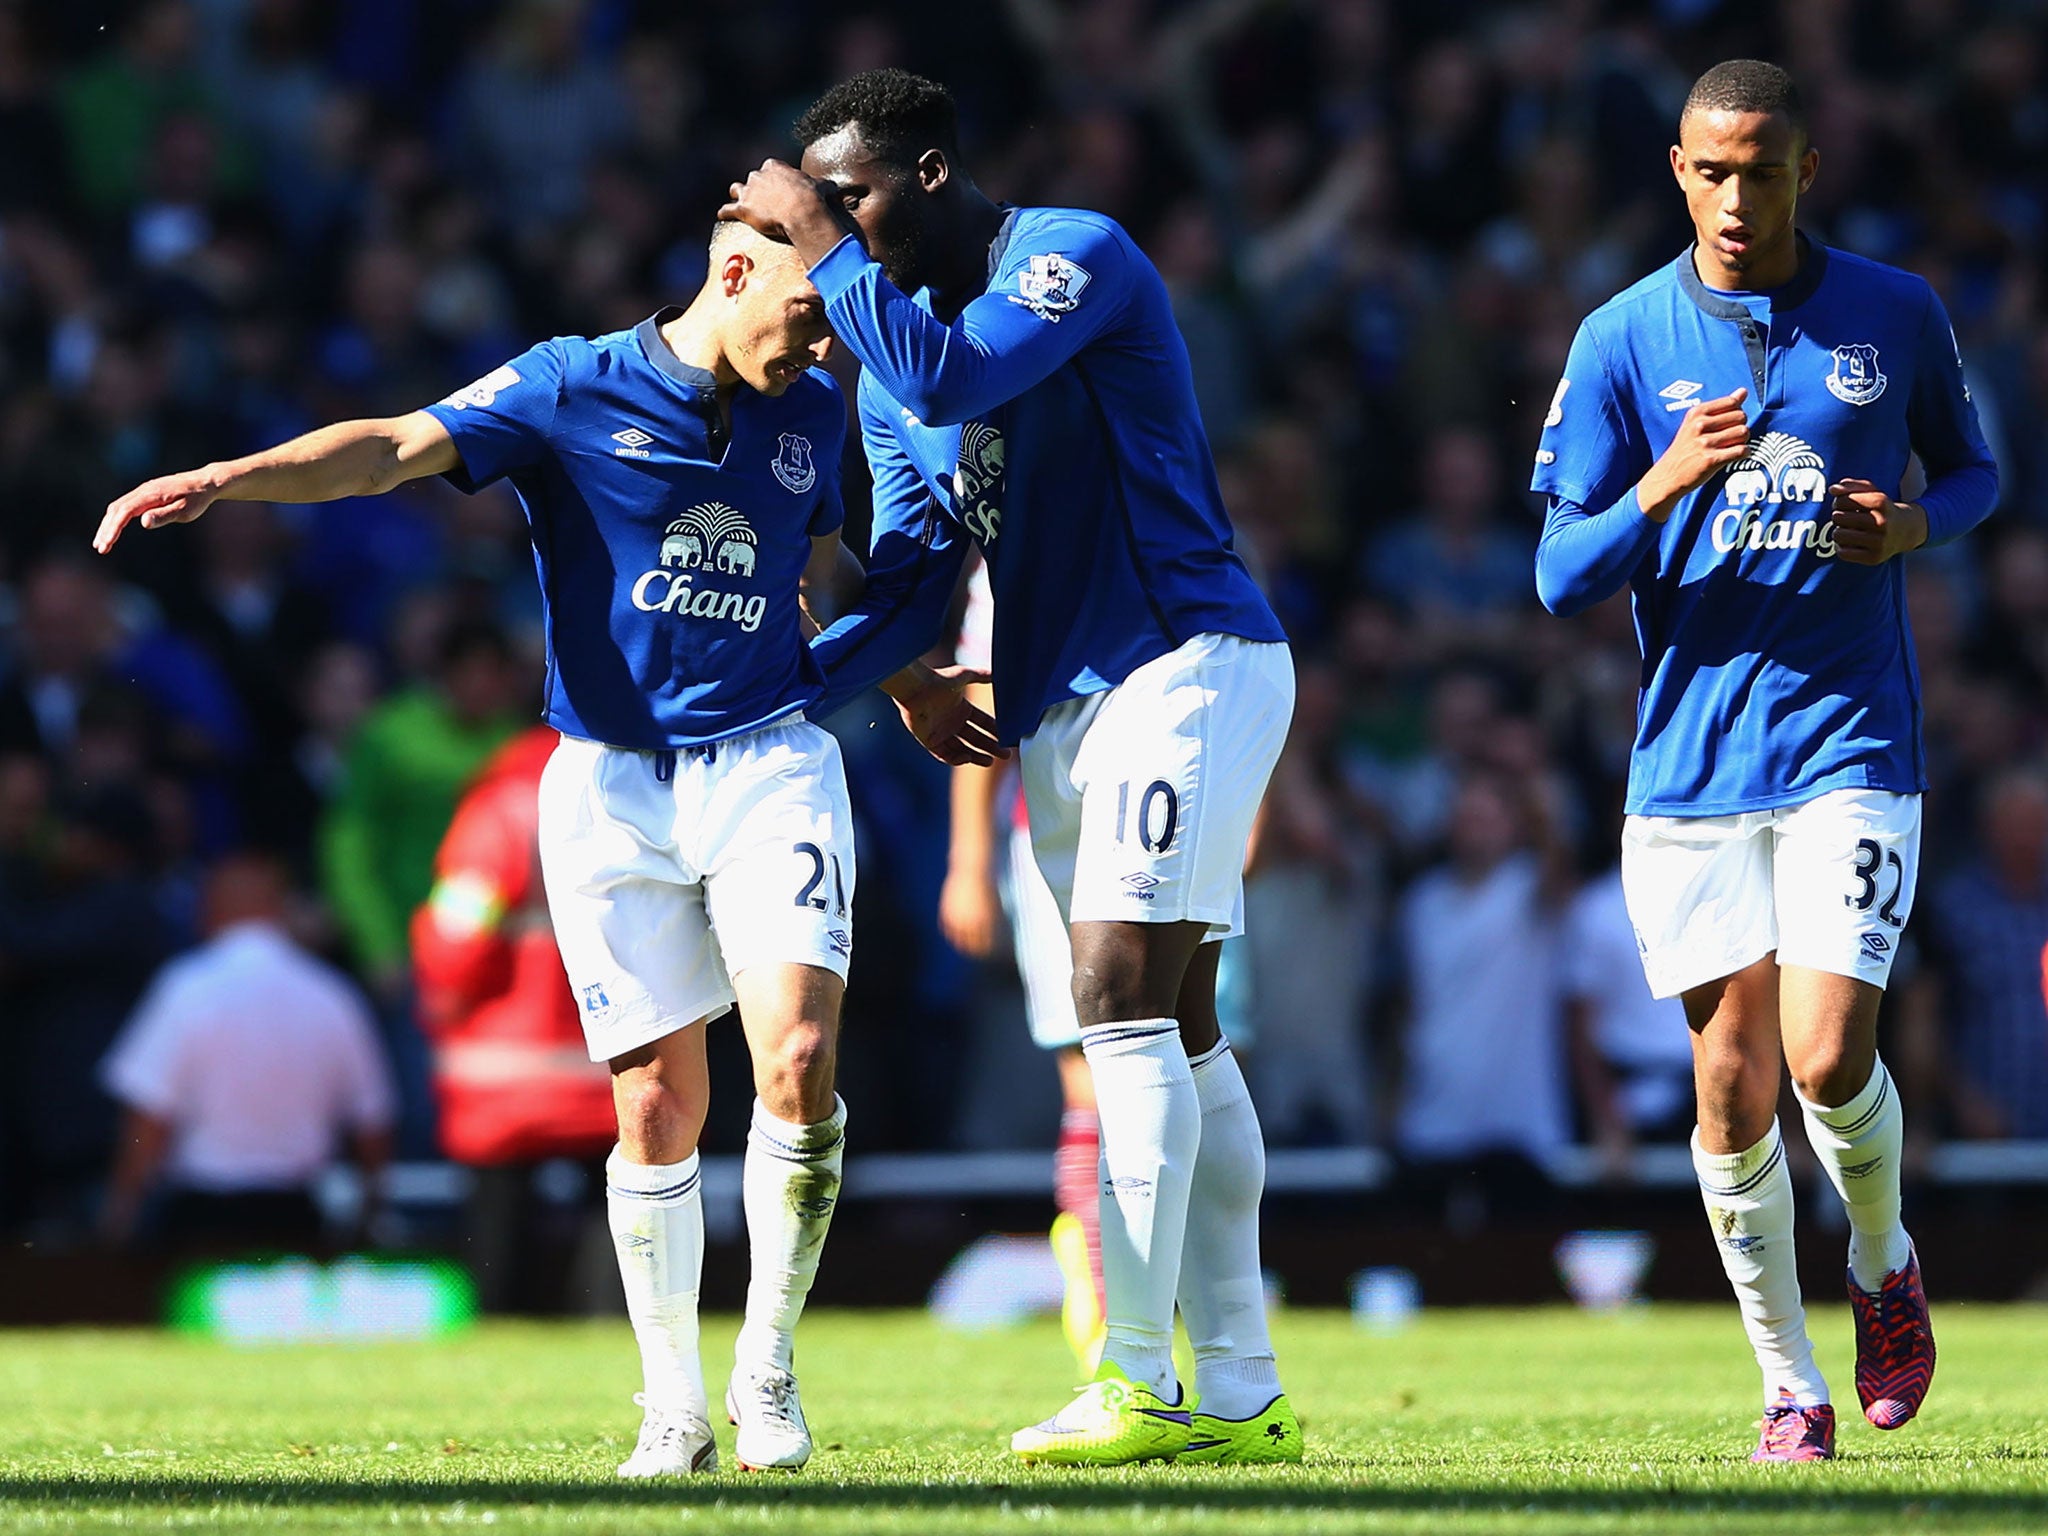 Romelu Lukaku celebrates with Leon Osman after the latter scores for Everton